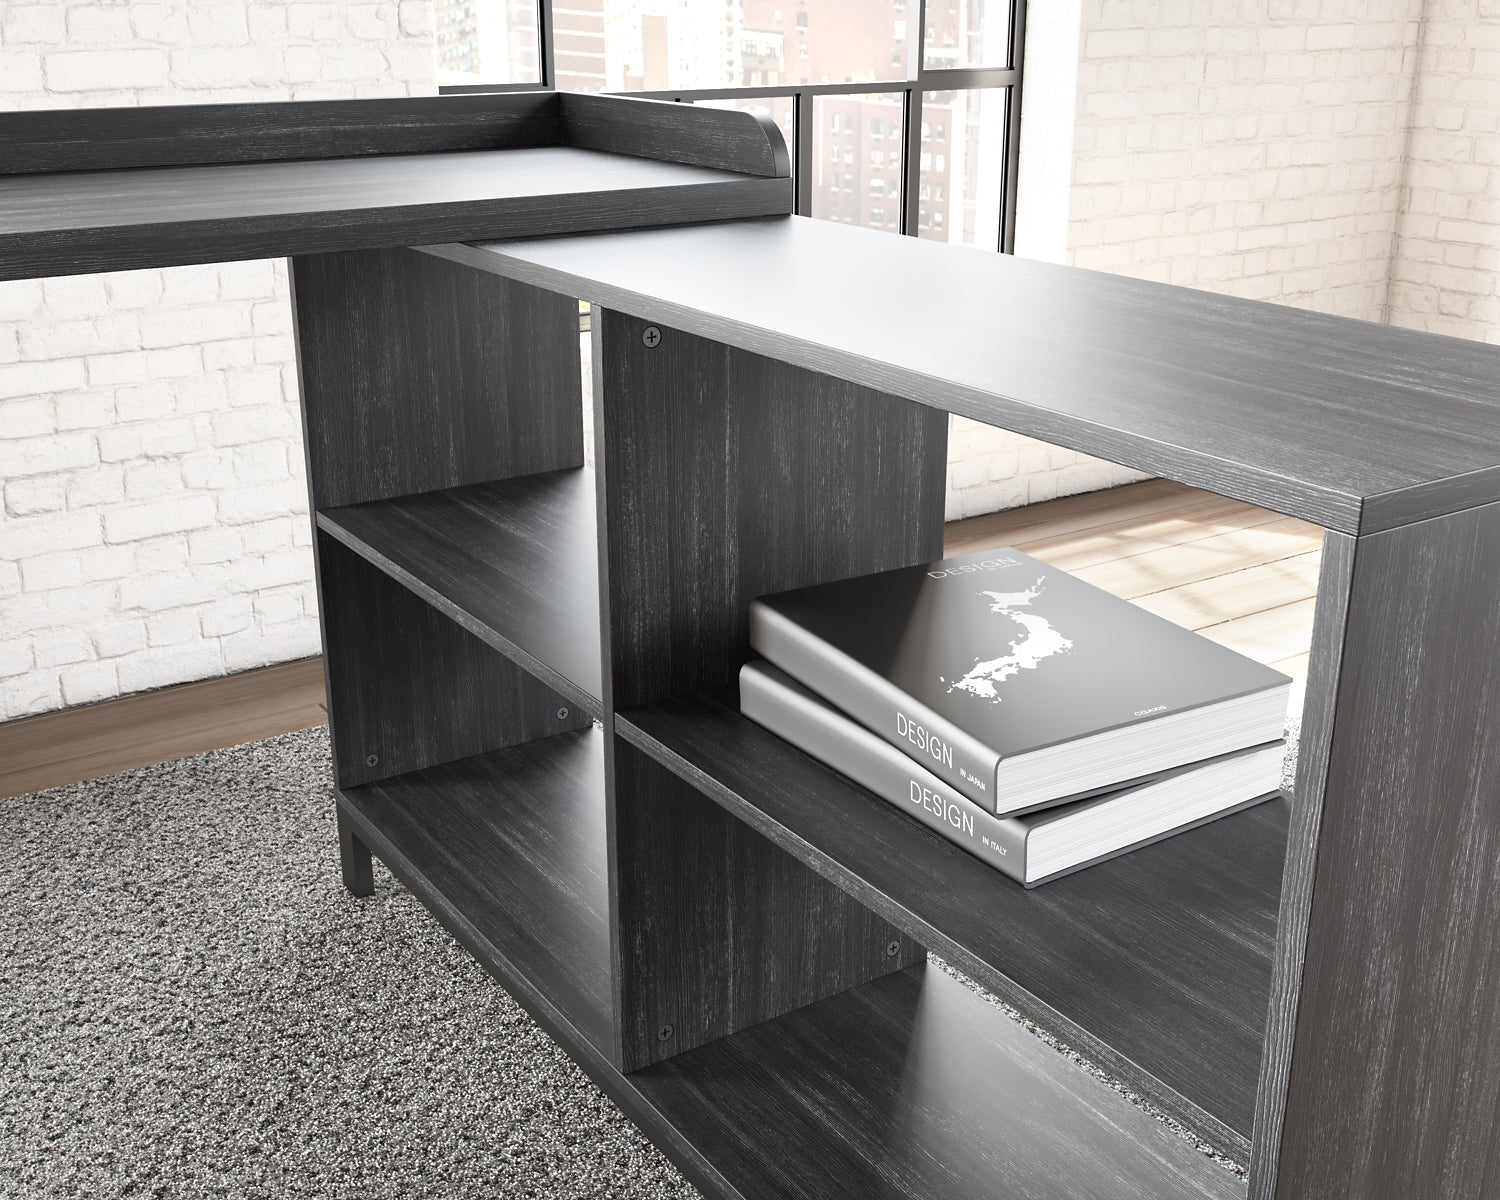 Yarlow L-Desk at Cloud 9 Mattress & Furniture furniture, home furnishing, home decor